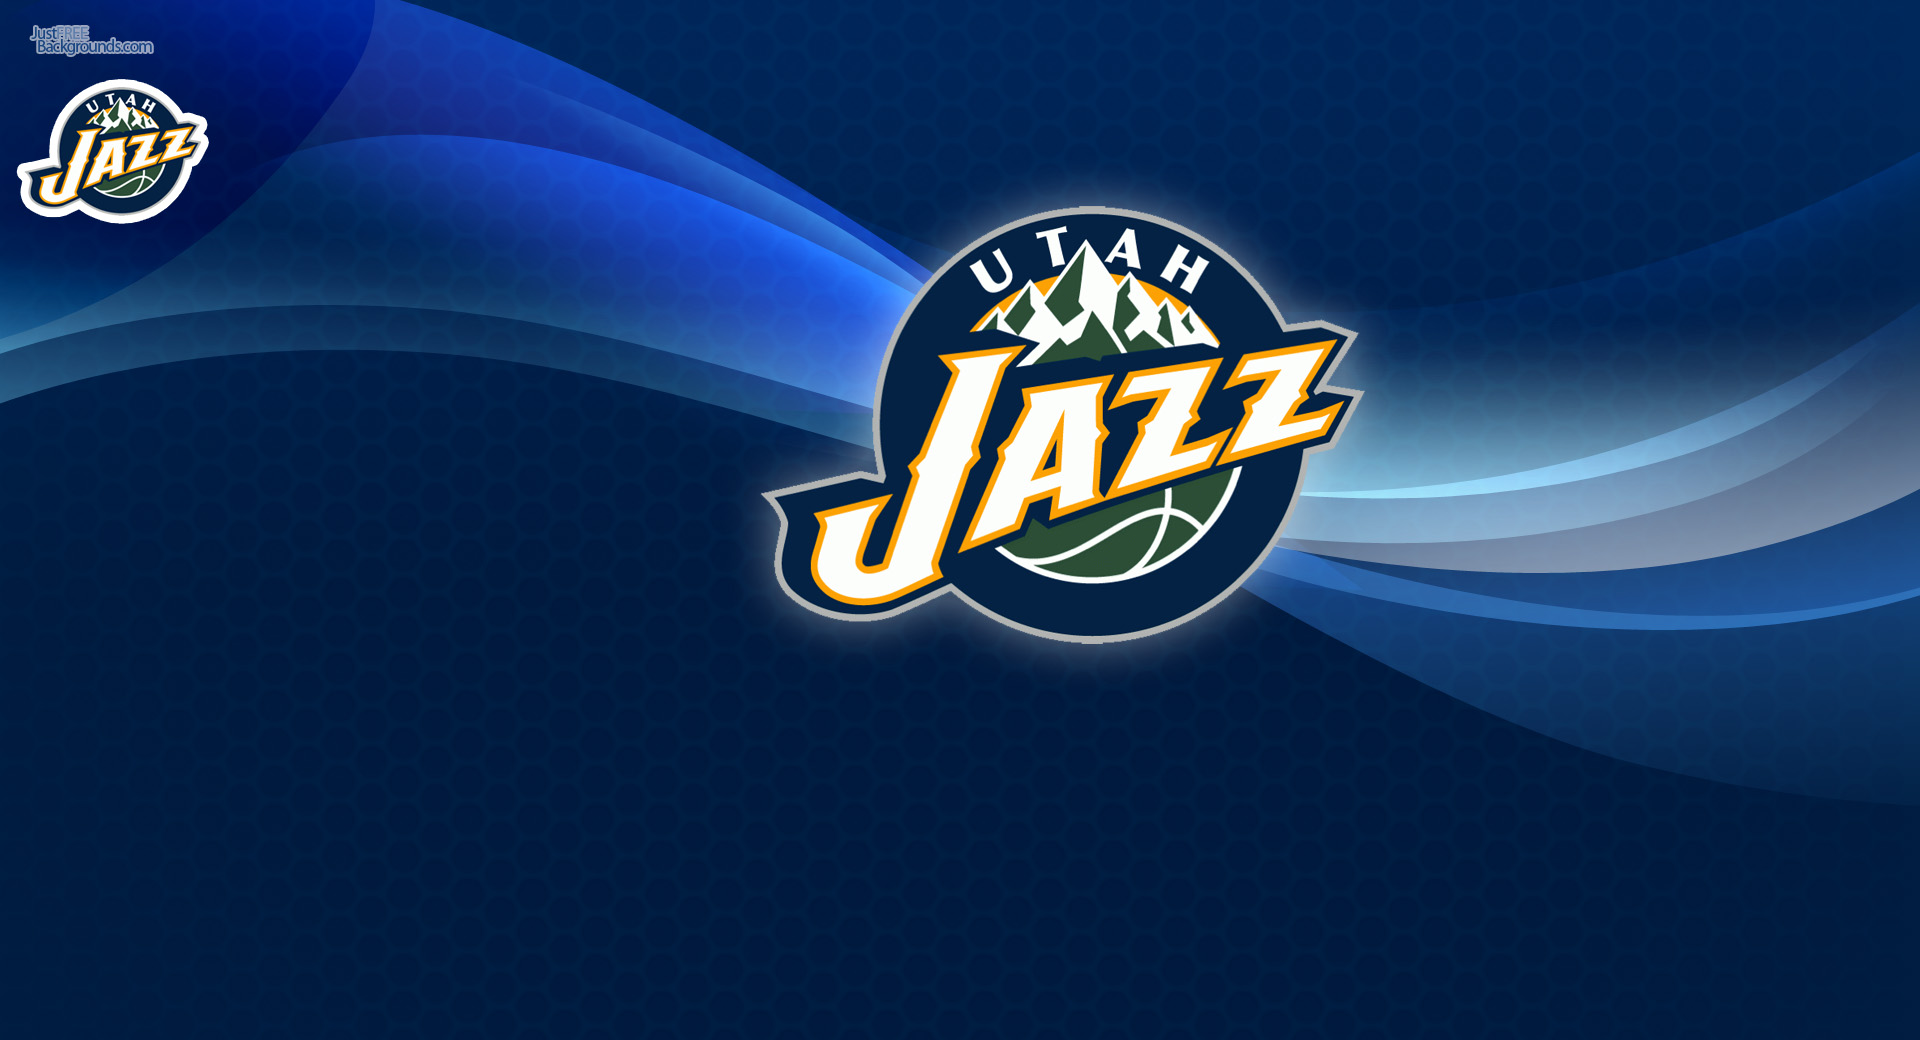 Utah Jazz Image Wallpaper